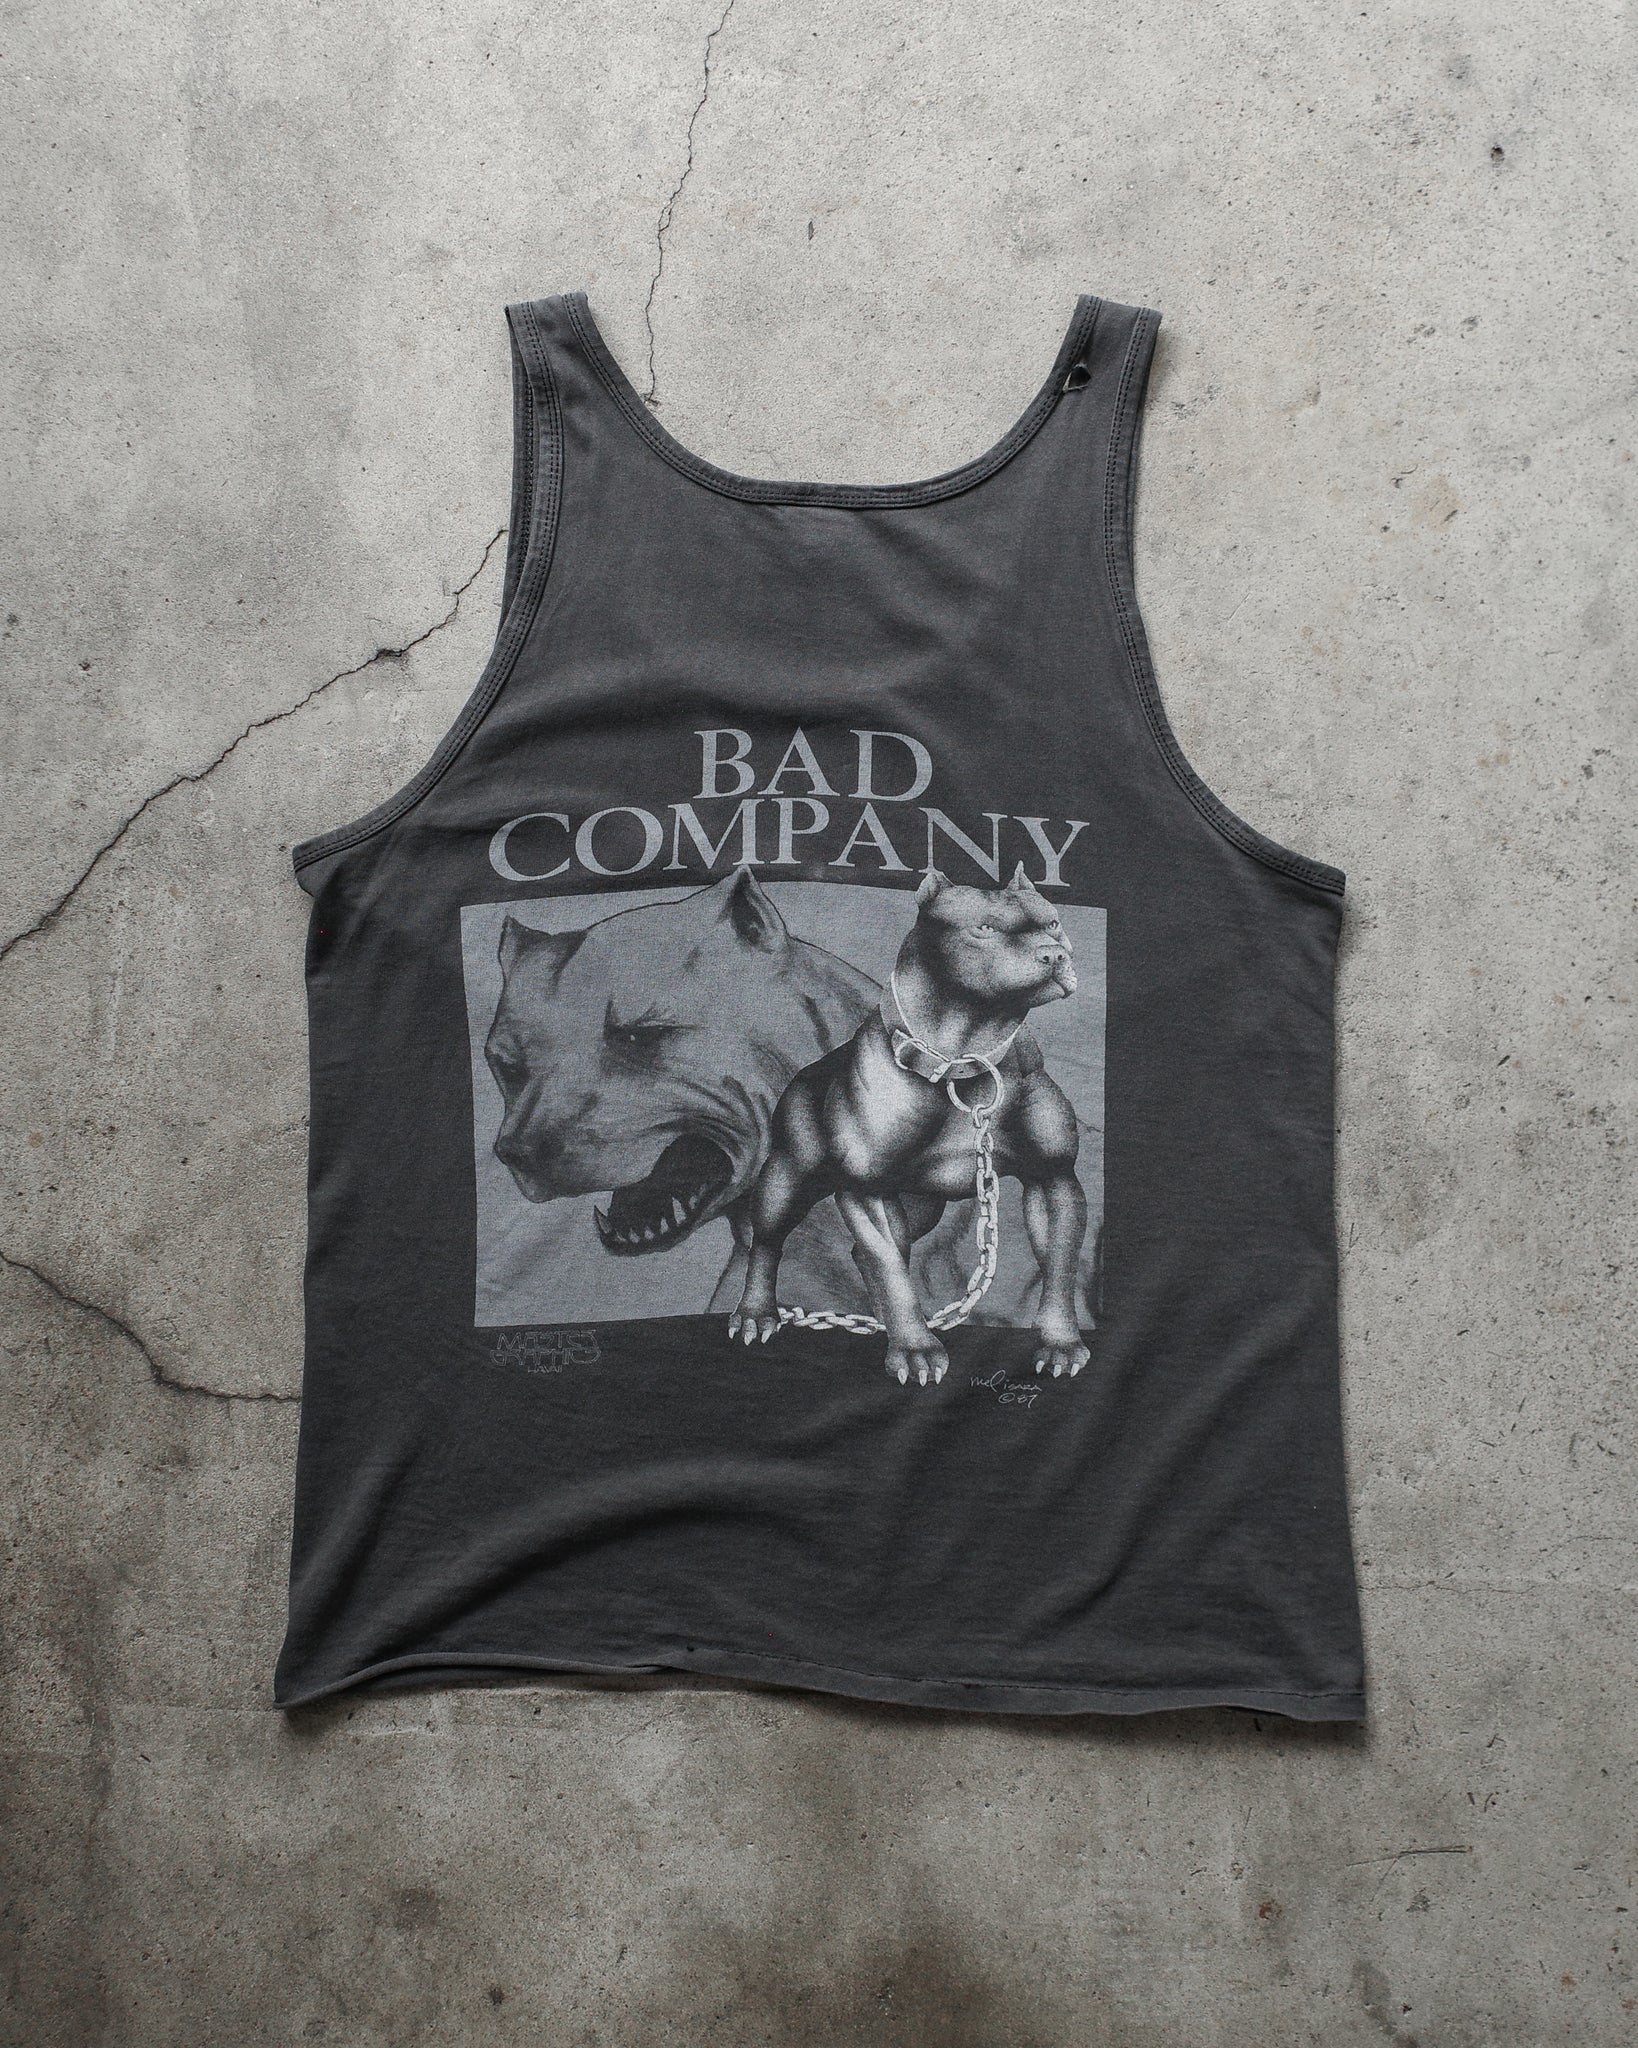 1987 "Bad Company" Tank Top